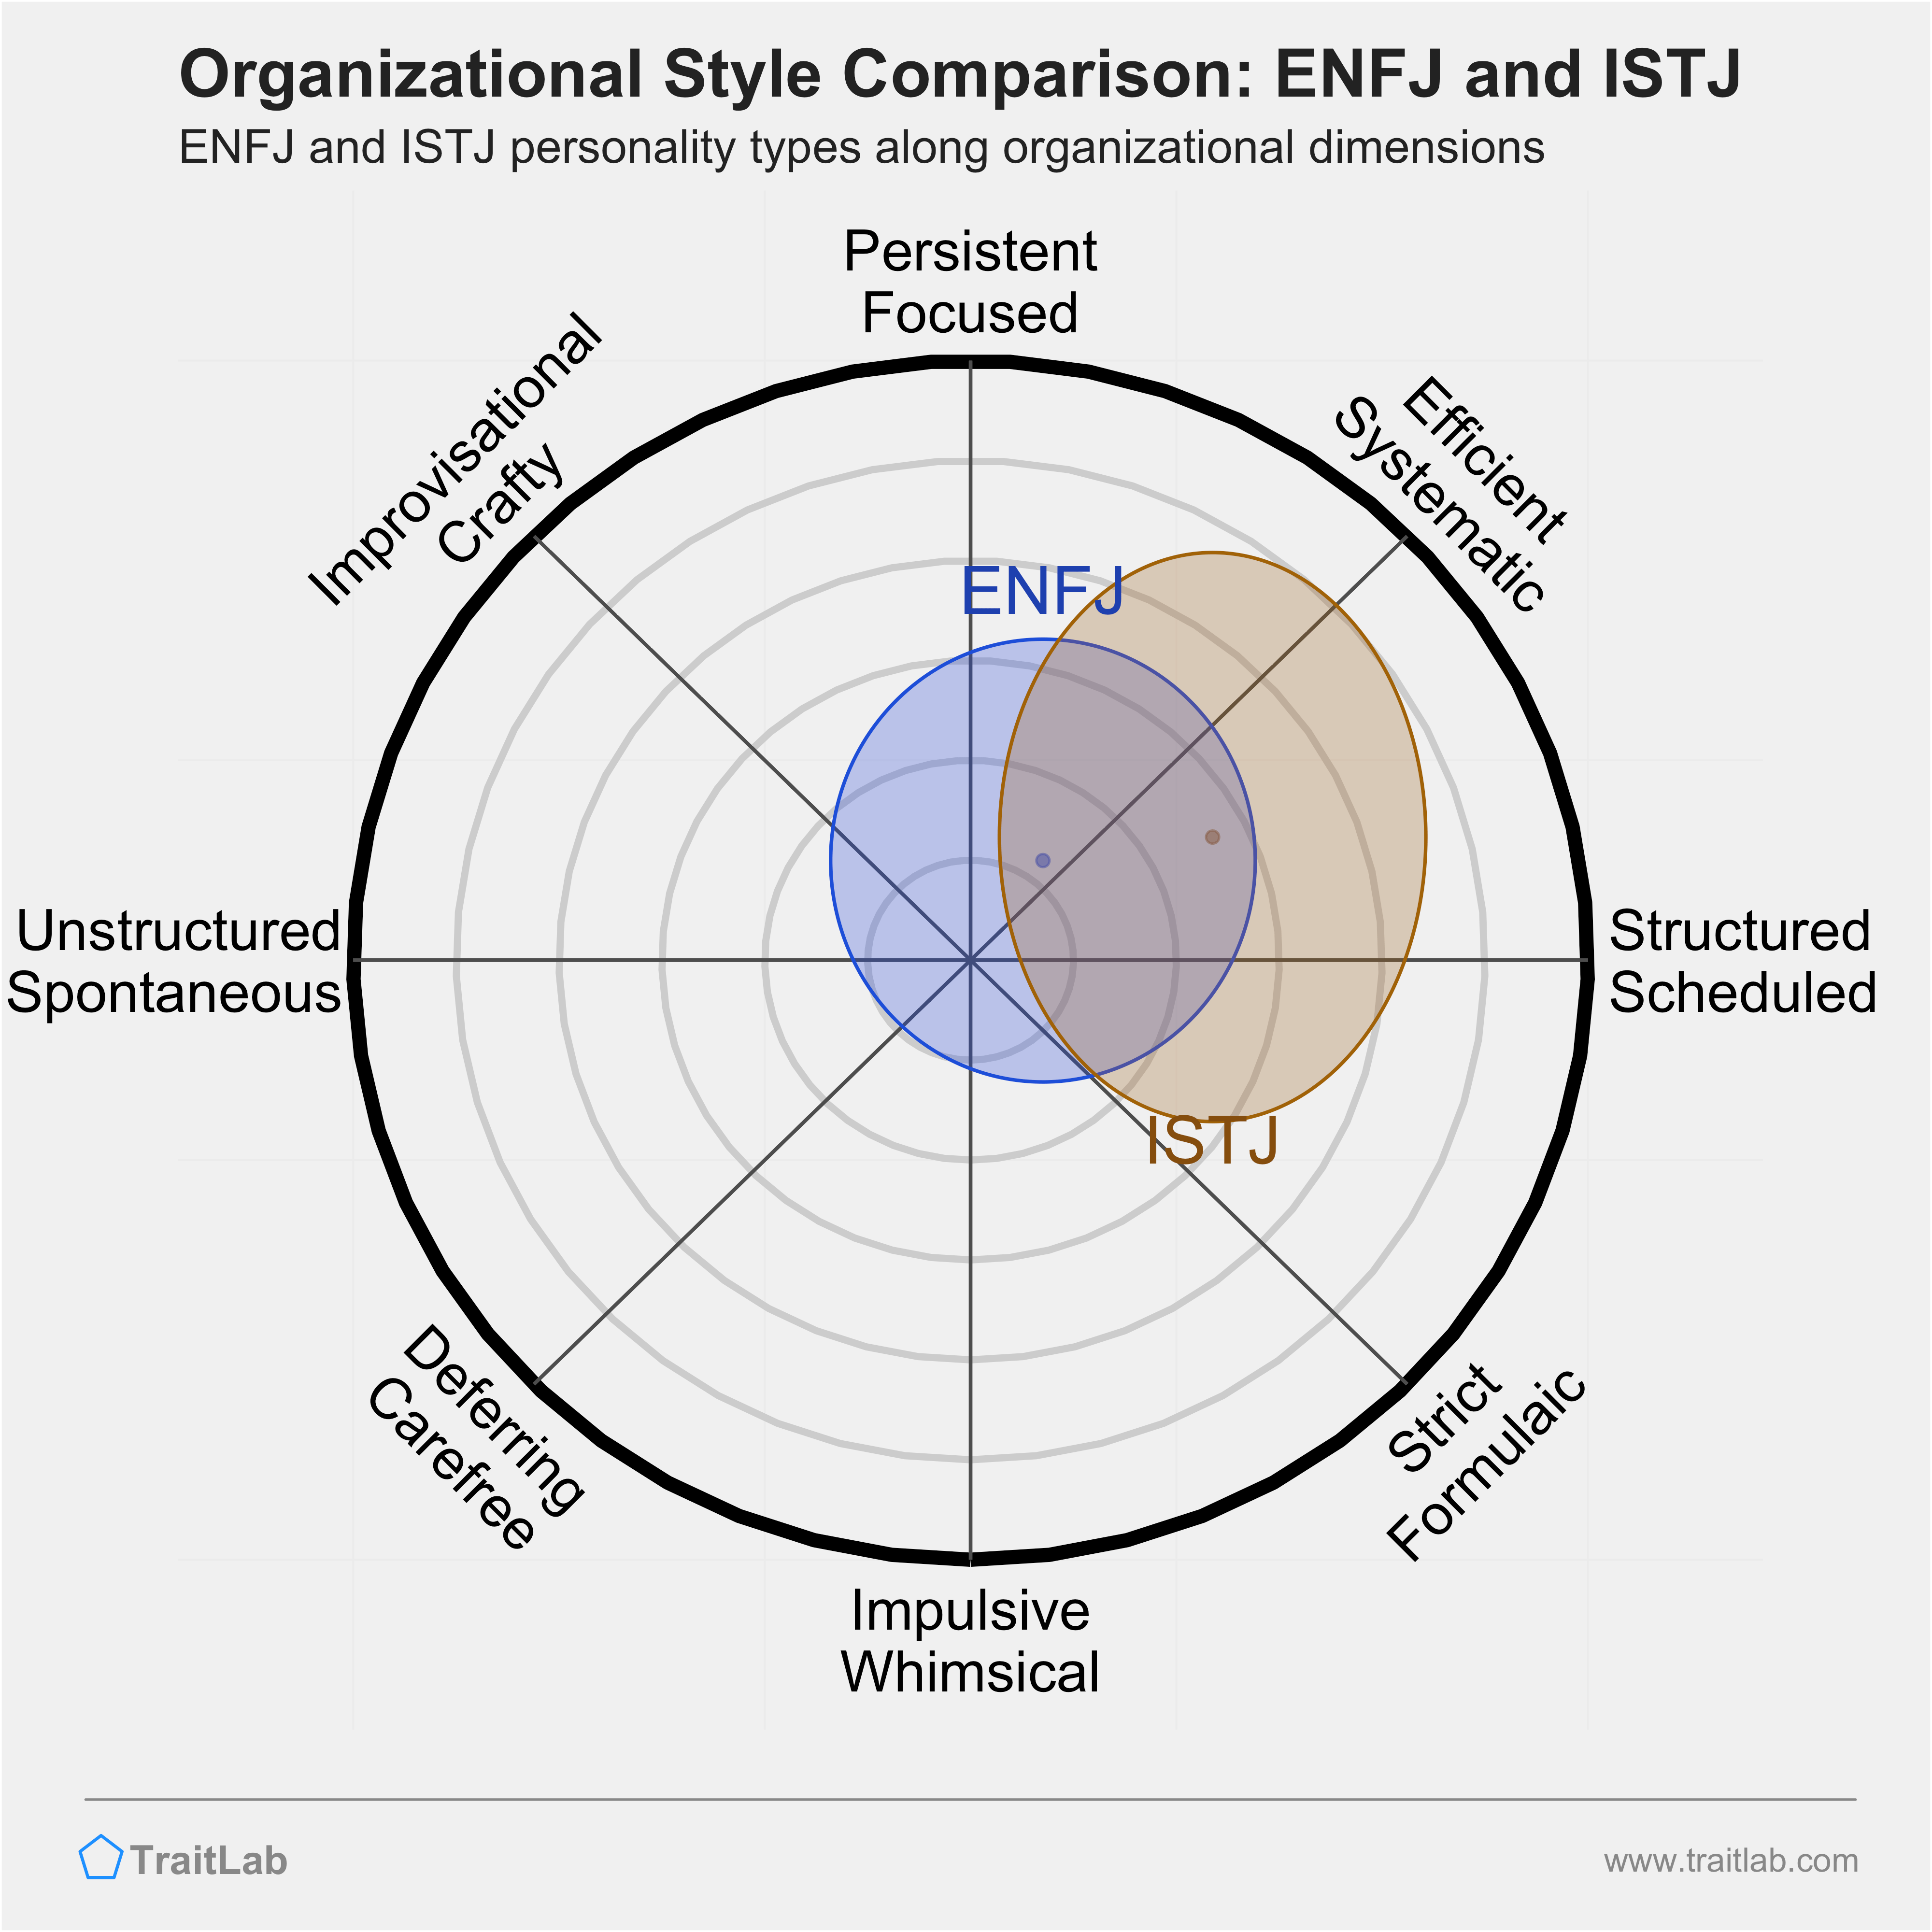 ENFJ and ISTJ comparison across organizational dimensions